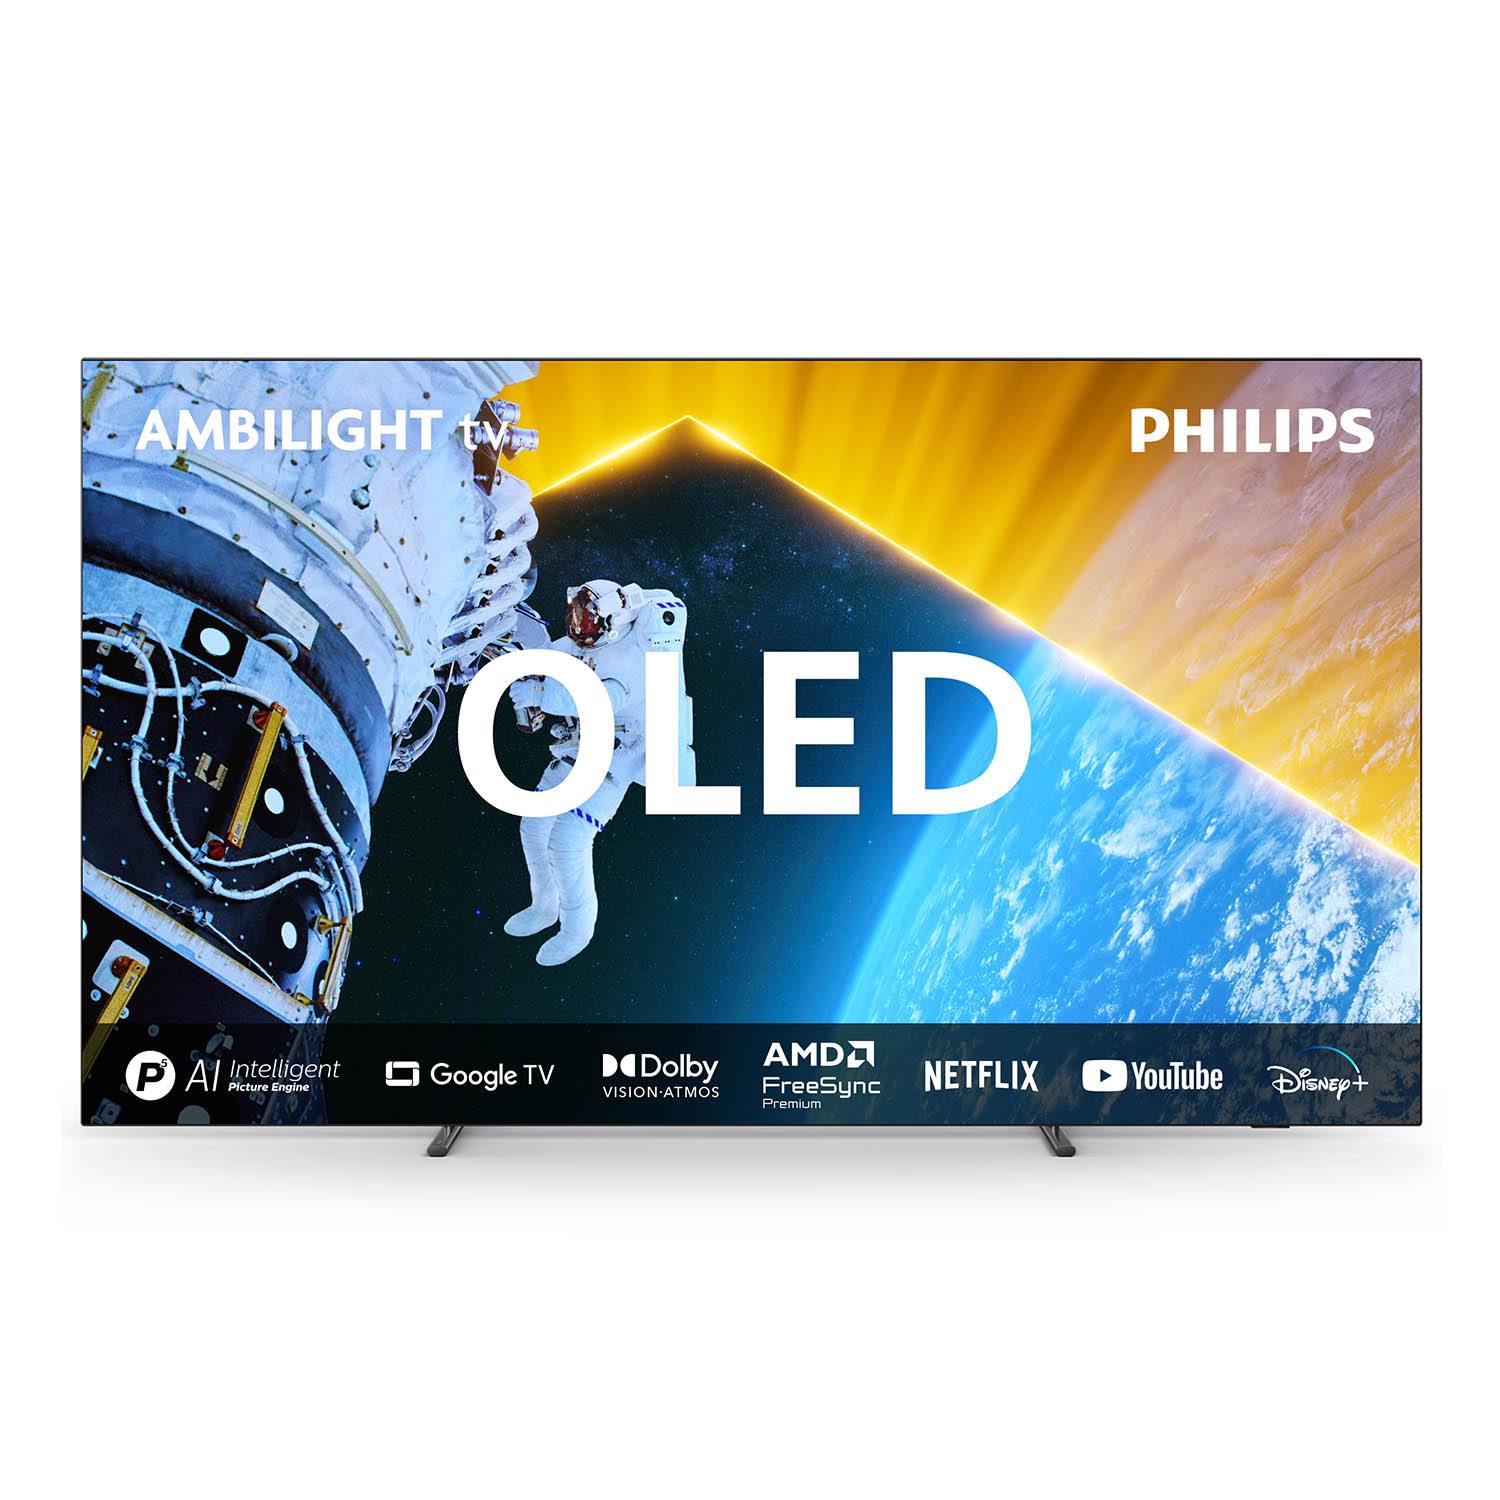 Philips Ambilight TV OLED809 OLED-TV